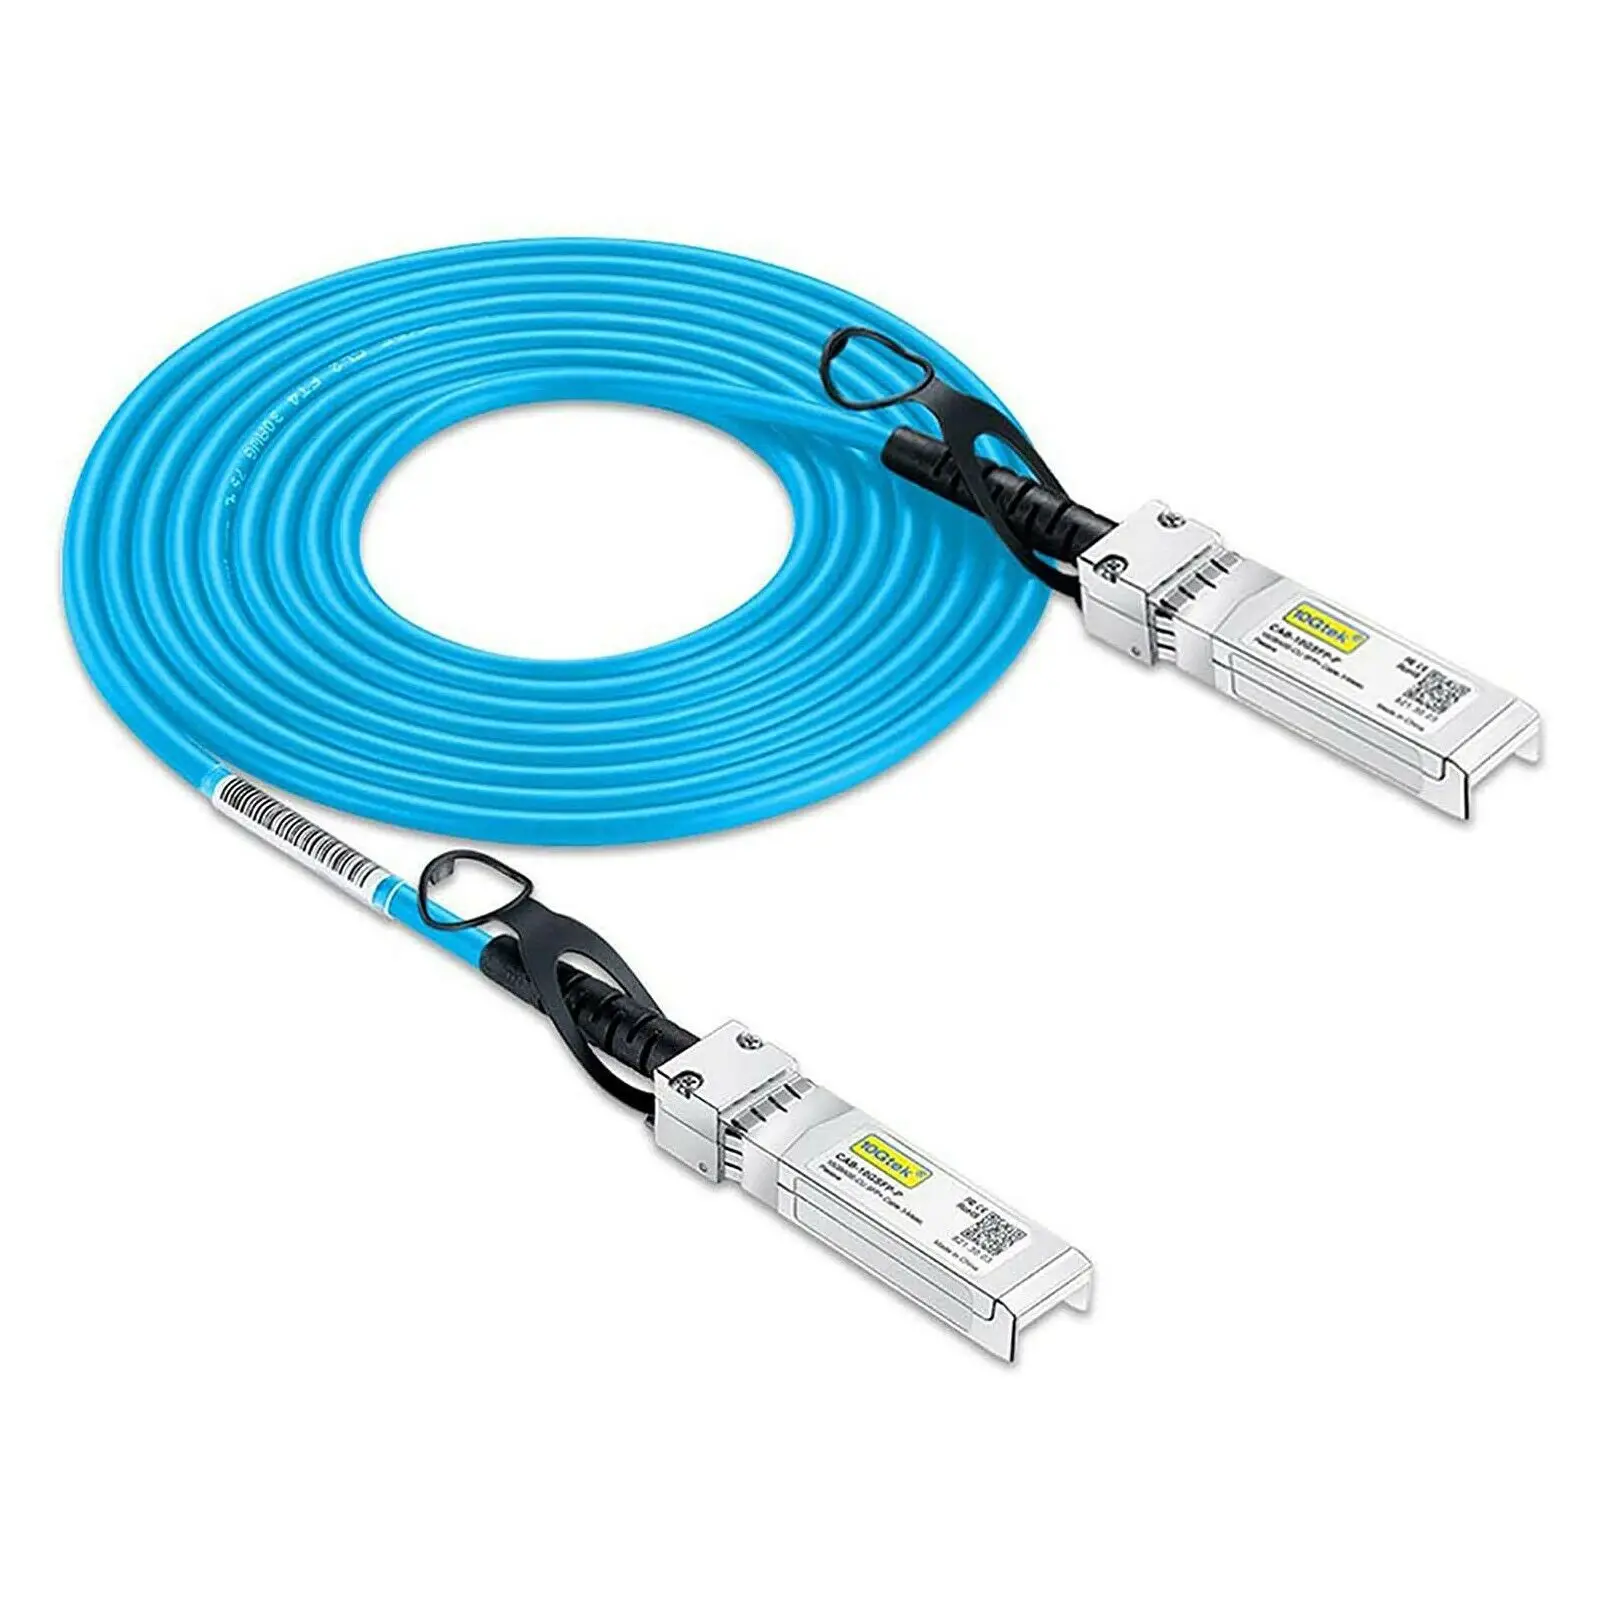 [Blue] Colored 10G SFP+ DAC Cable - Twinax SFP Cable for Cisco SFP-H10GB-CU1M, Arista, Ubiquiti,D-Link, Netgear,1-Meter(3.3ft) салатники 2 шт esprado arista blue 16см костяной фарфор